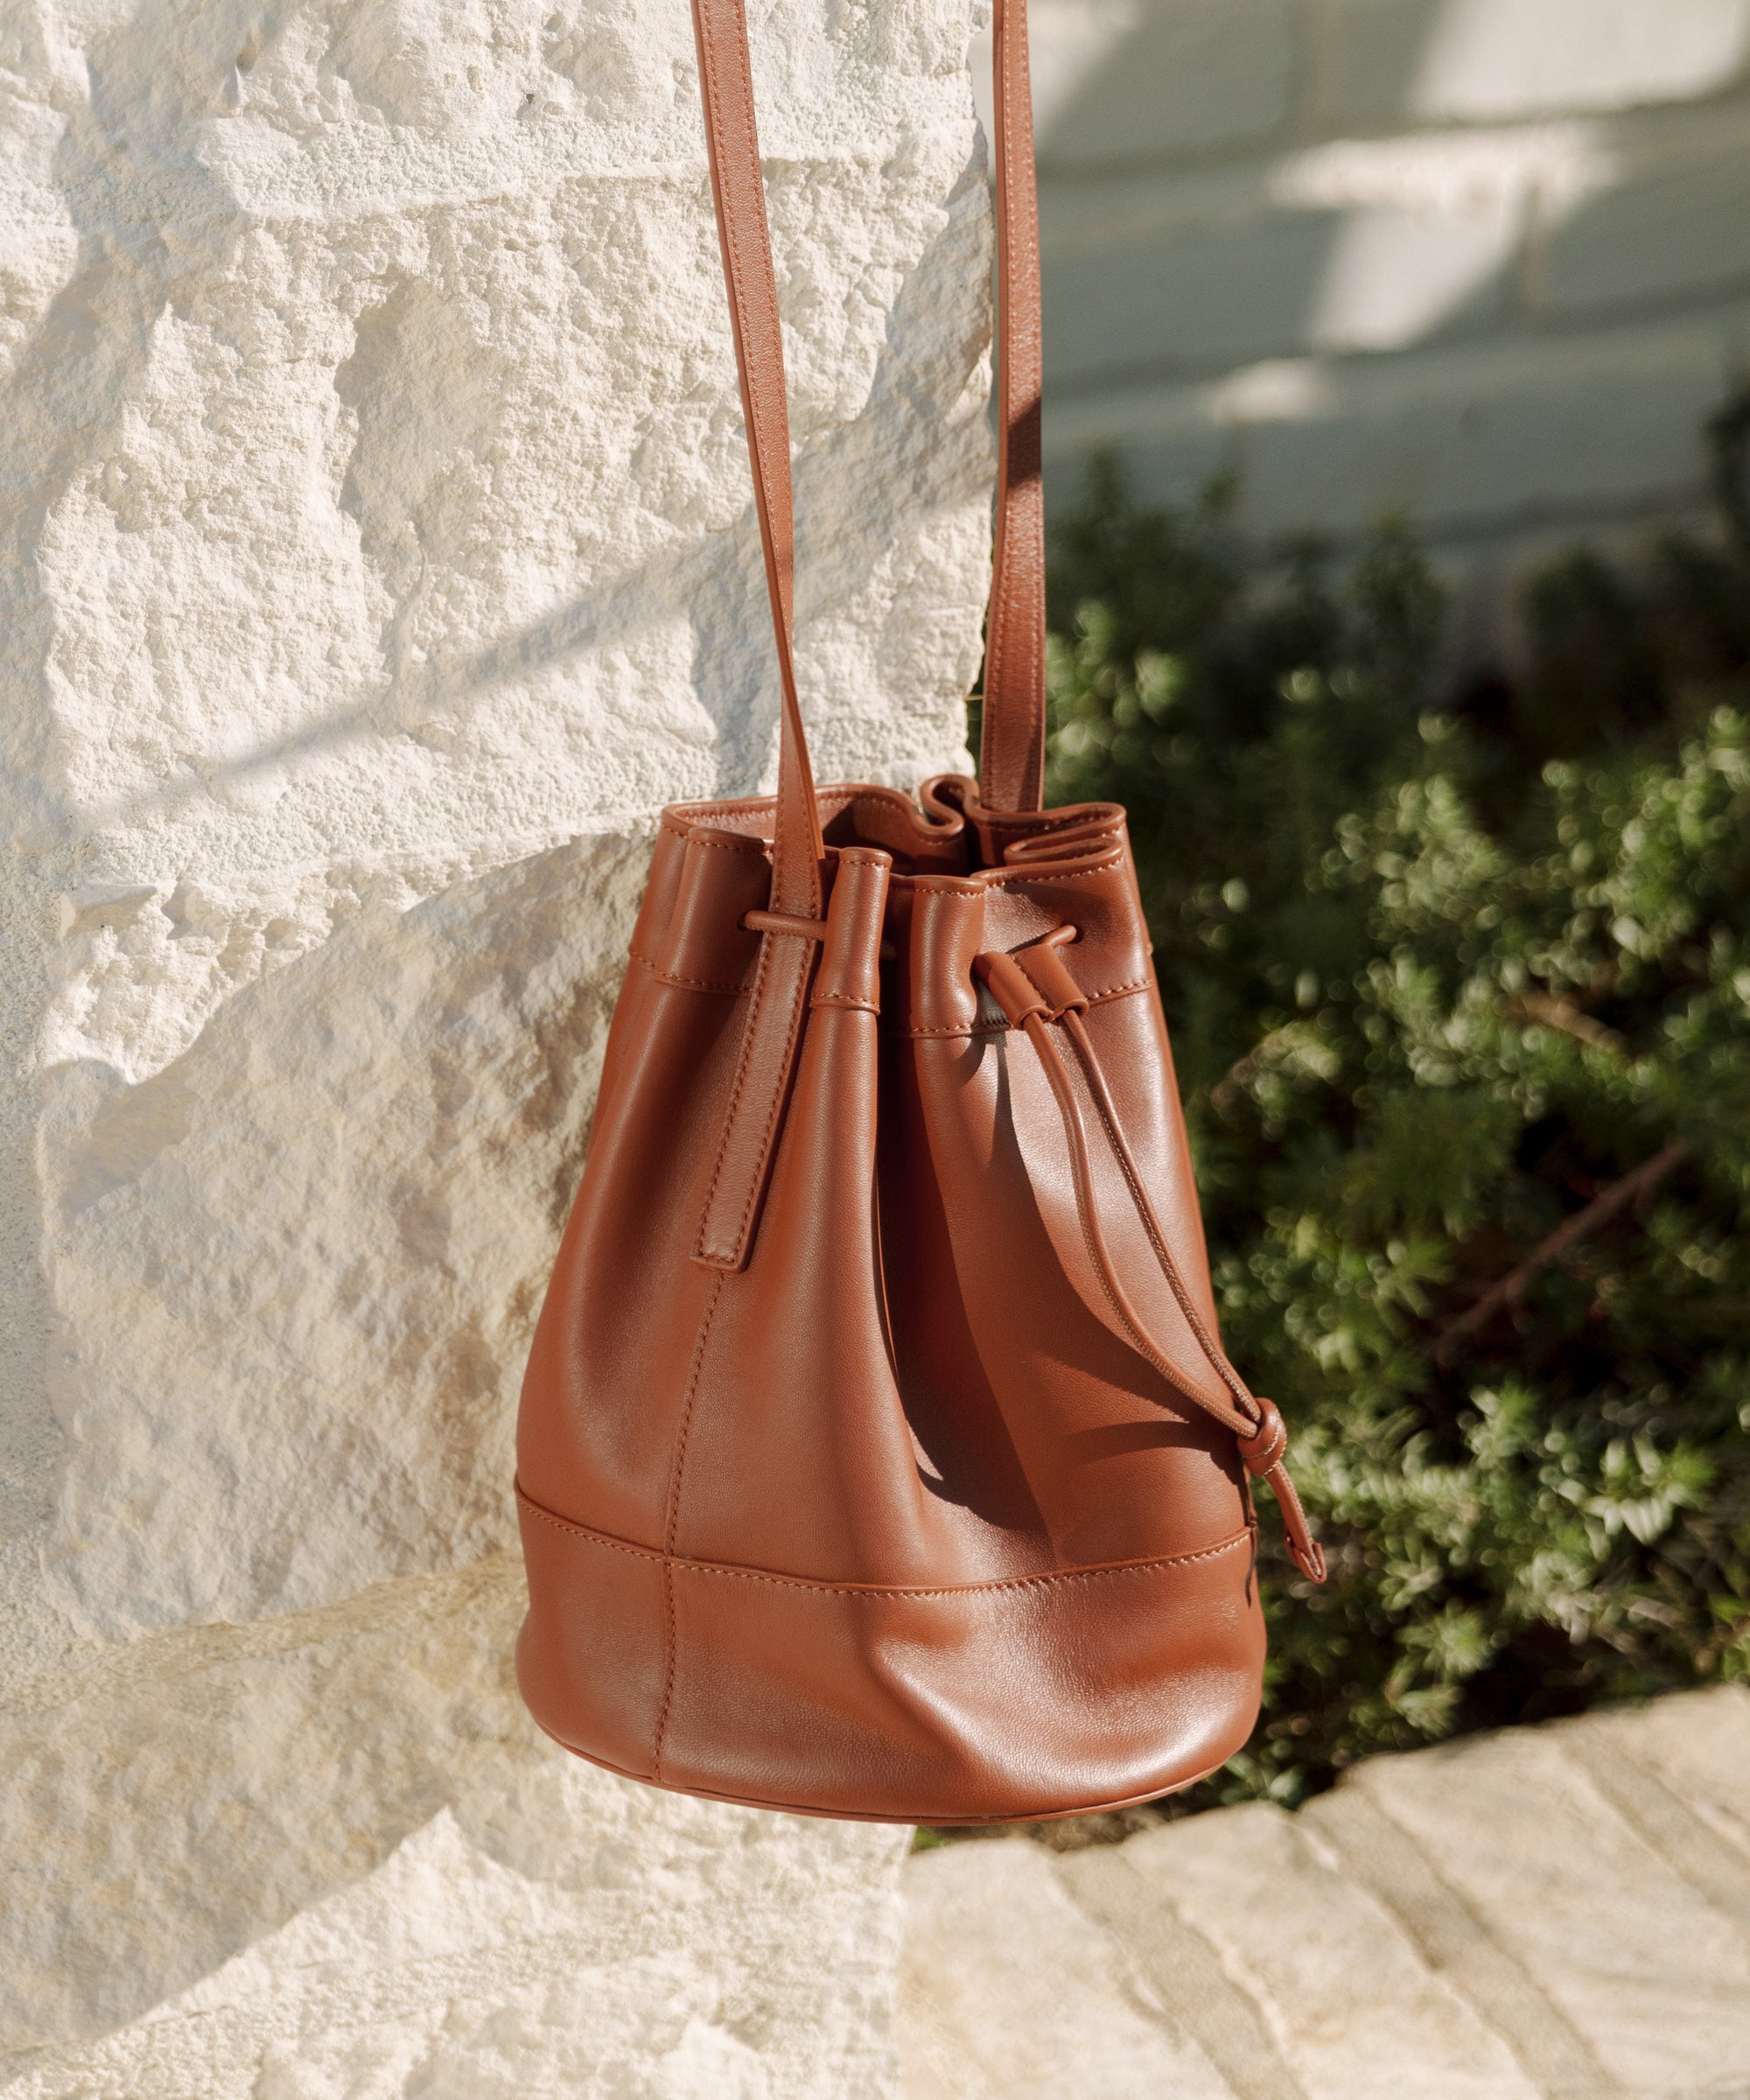 leather drawstring bag